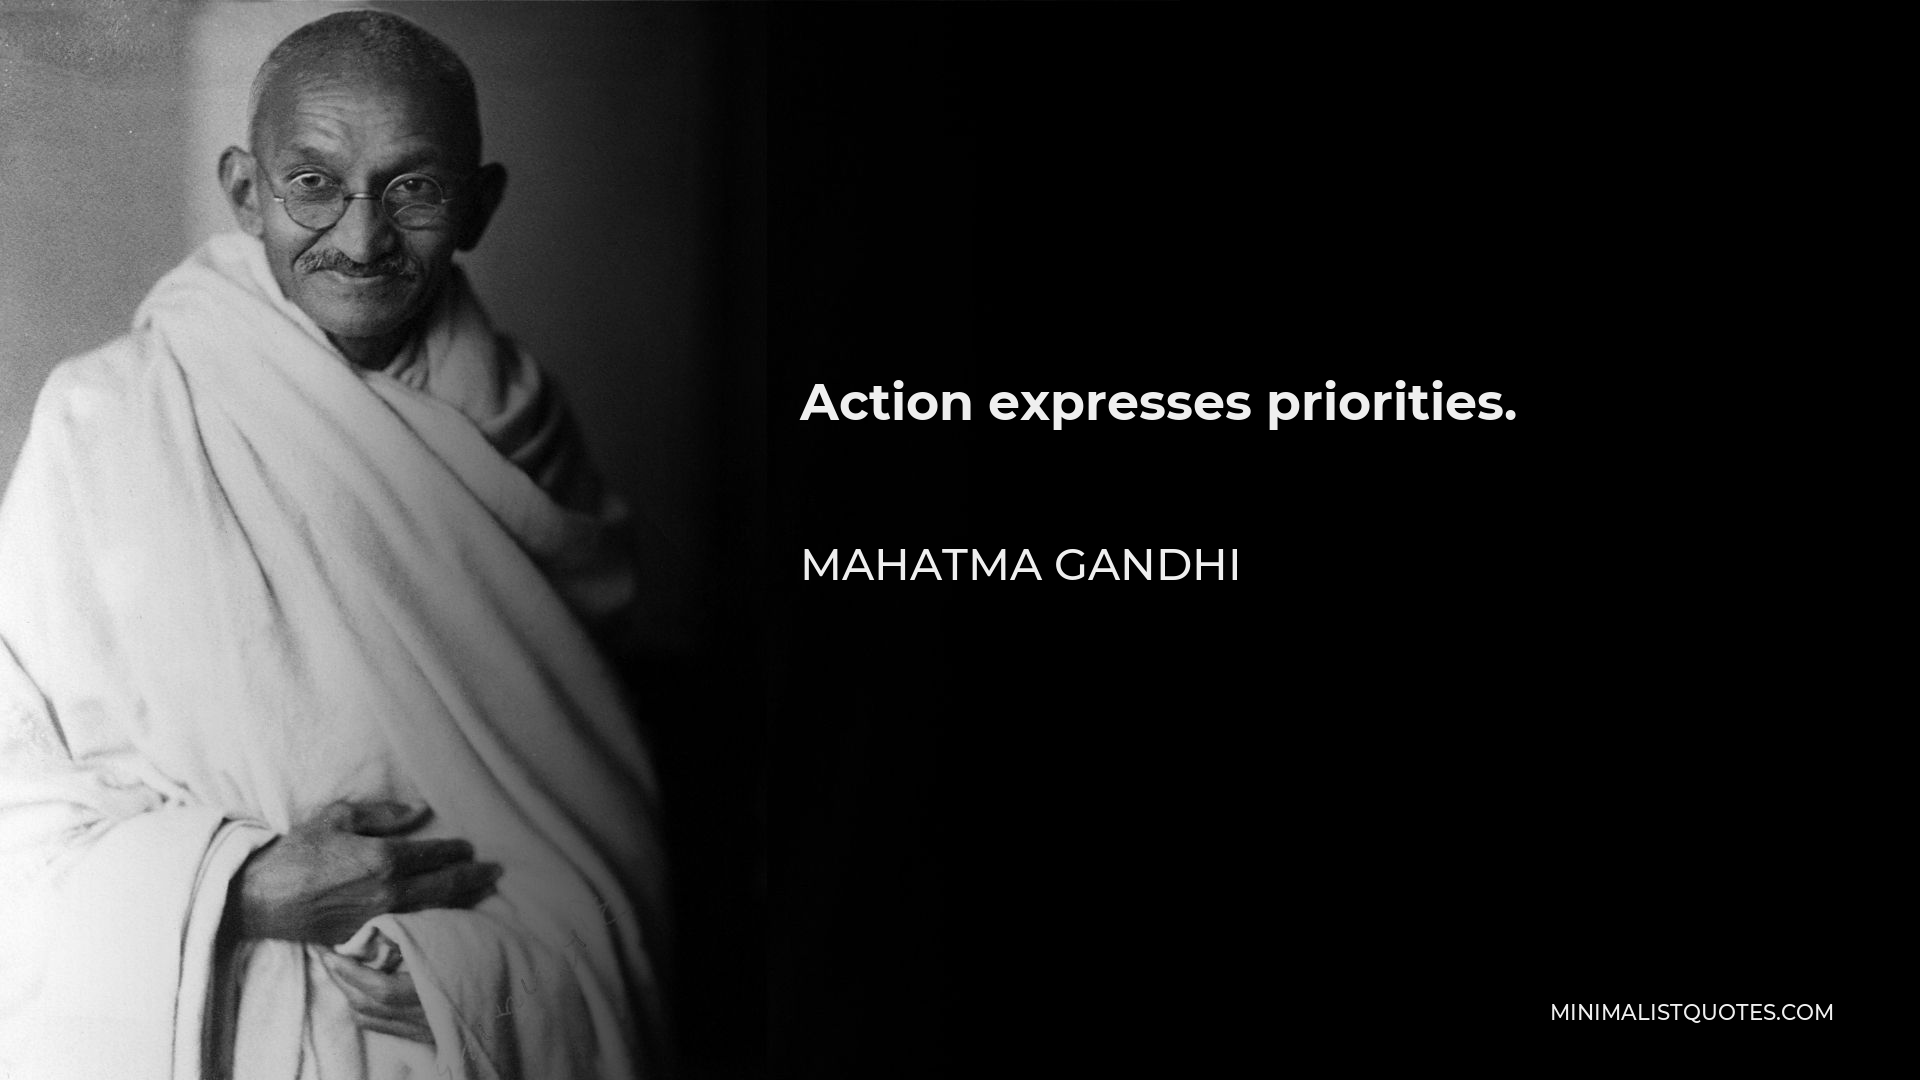 Mahatma Gandhi Quote - Action expresses priorities.